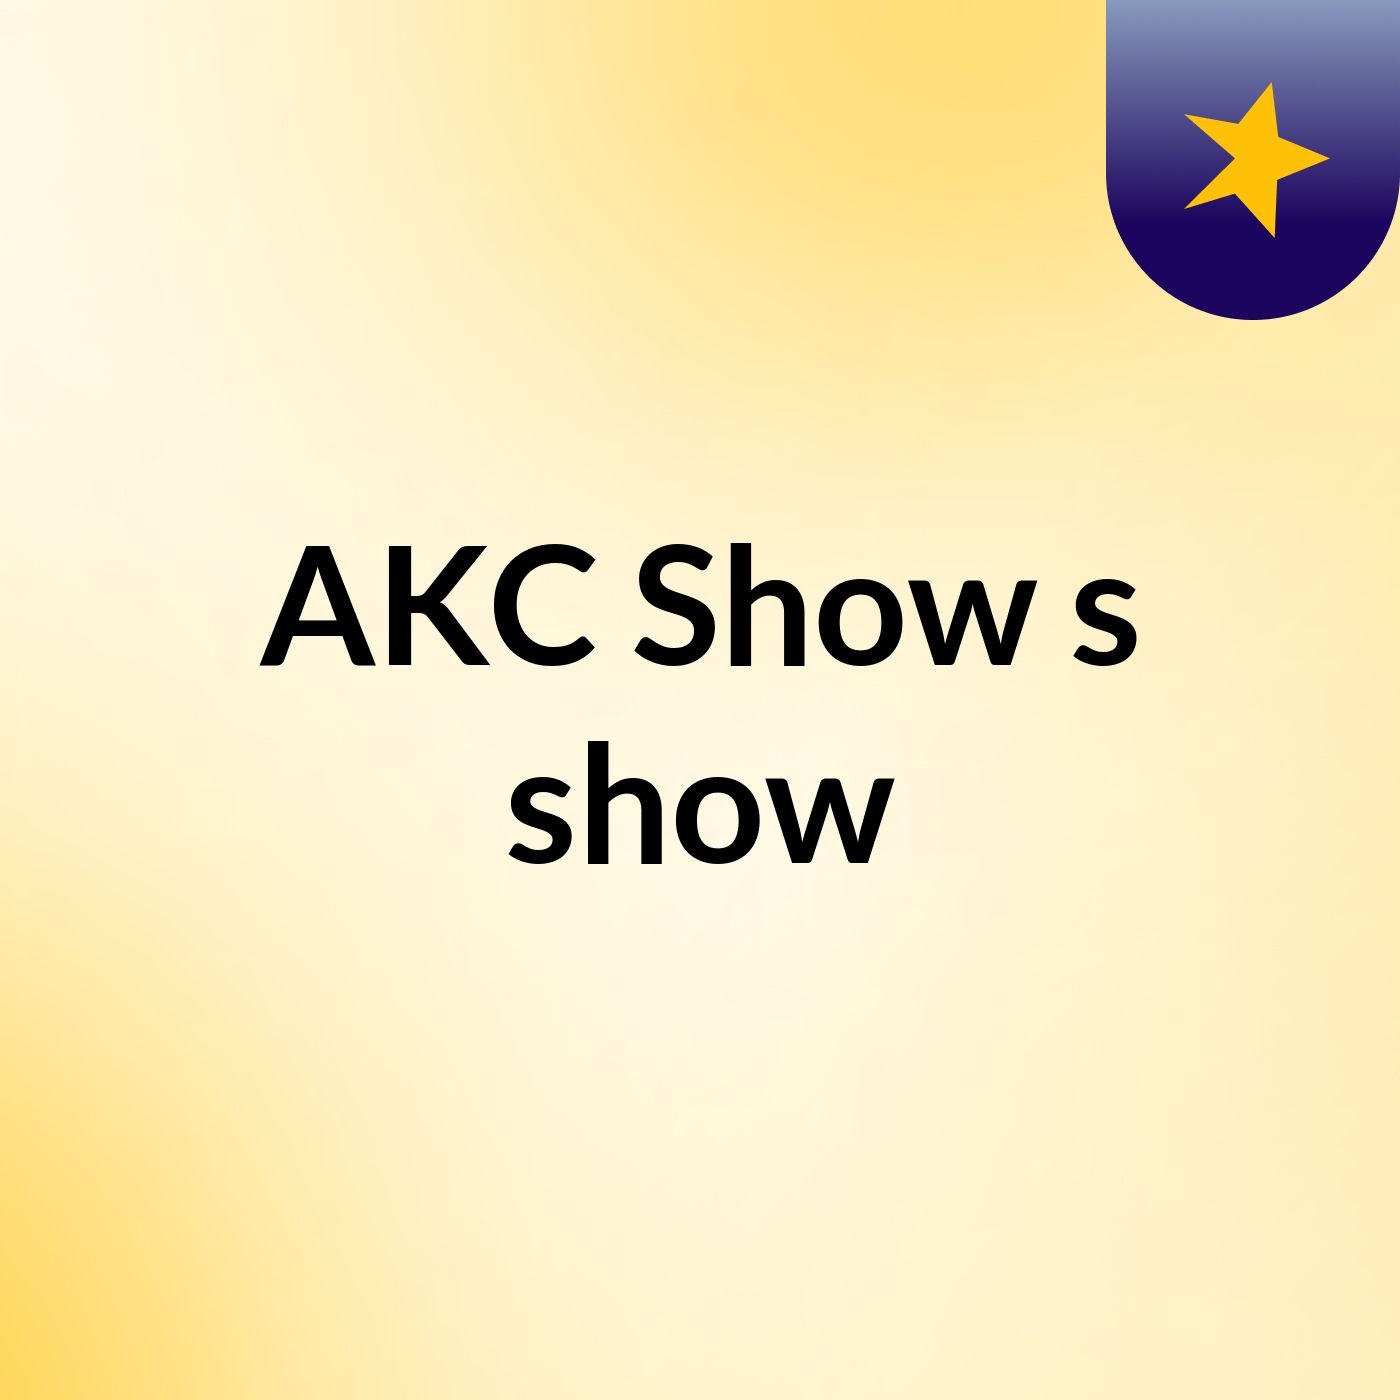 AKC Show's show